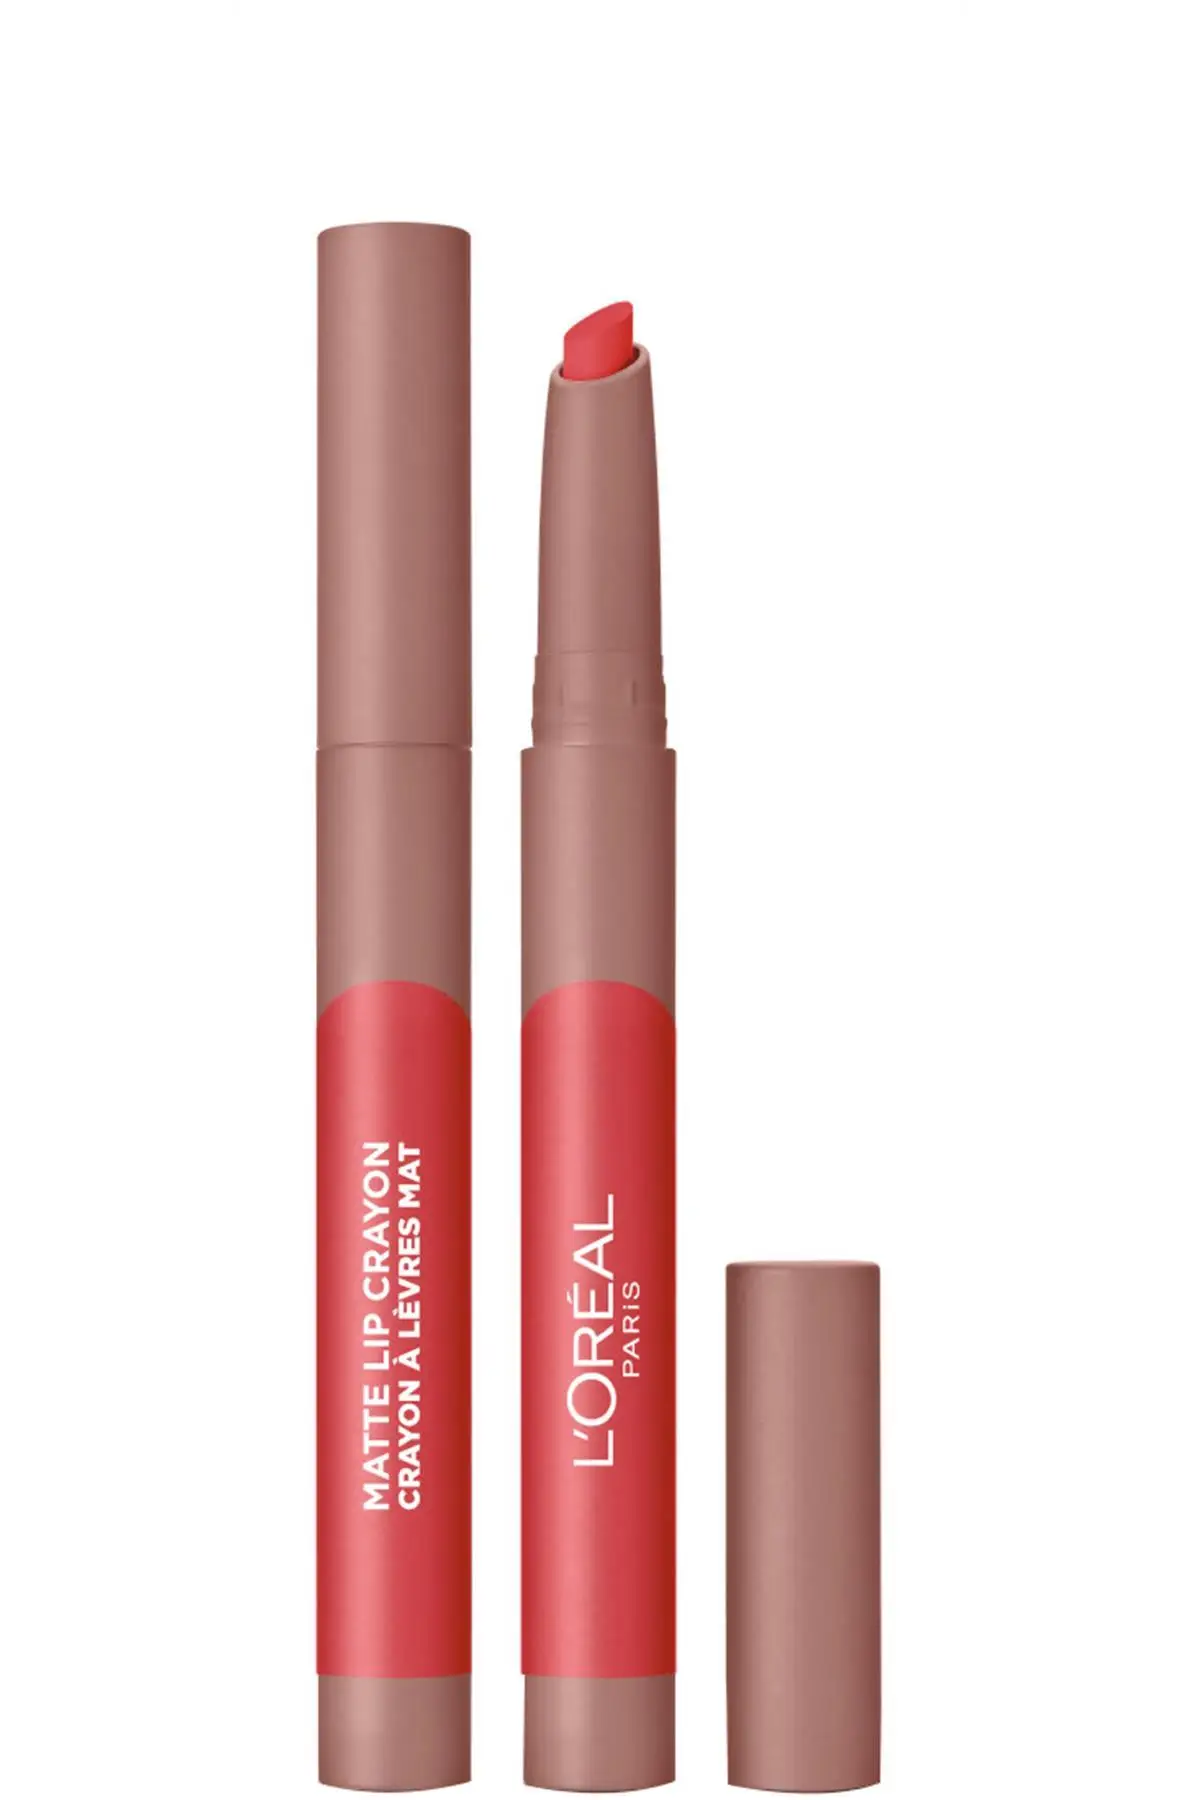 

Brand: L'Oreal Paris Infaillible Crayon Pen Lipstick No: 108 Category: Lipstick